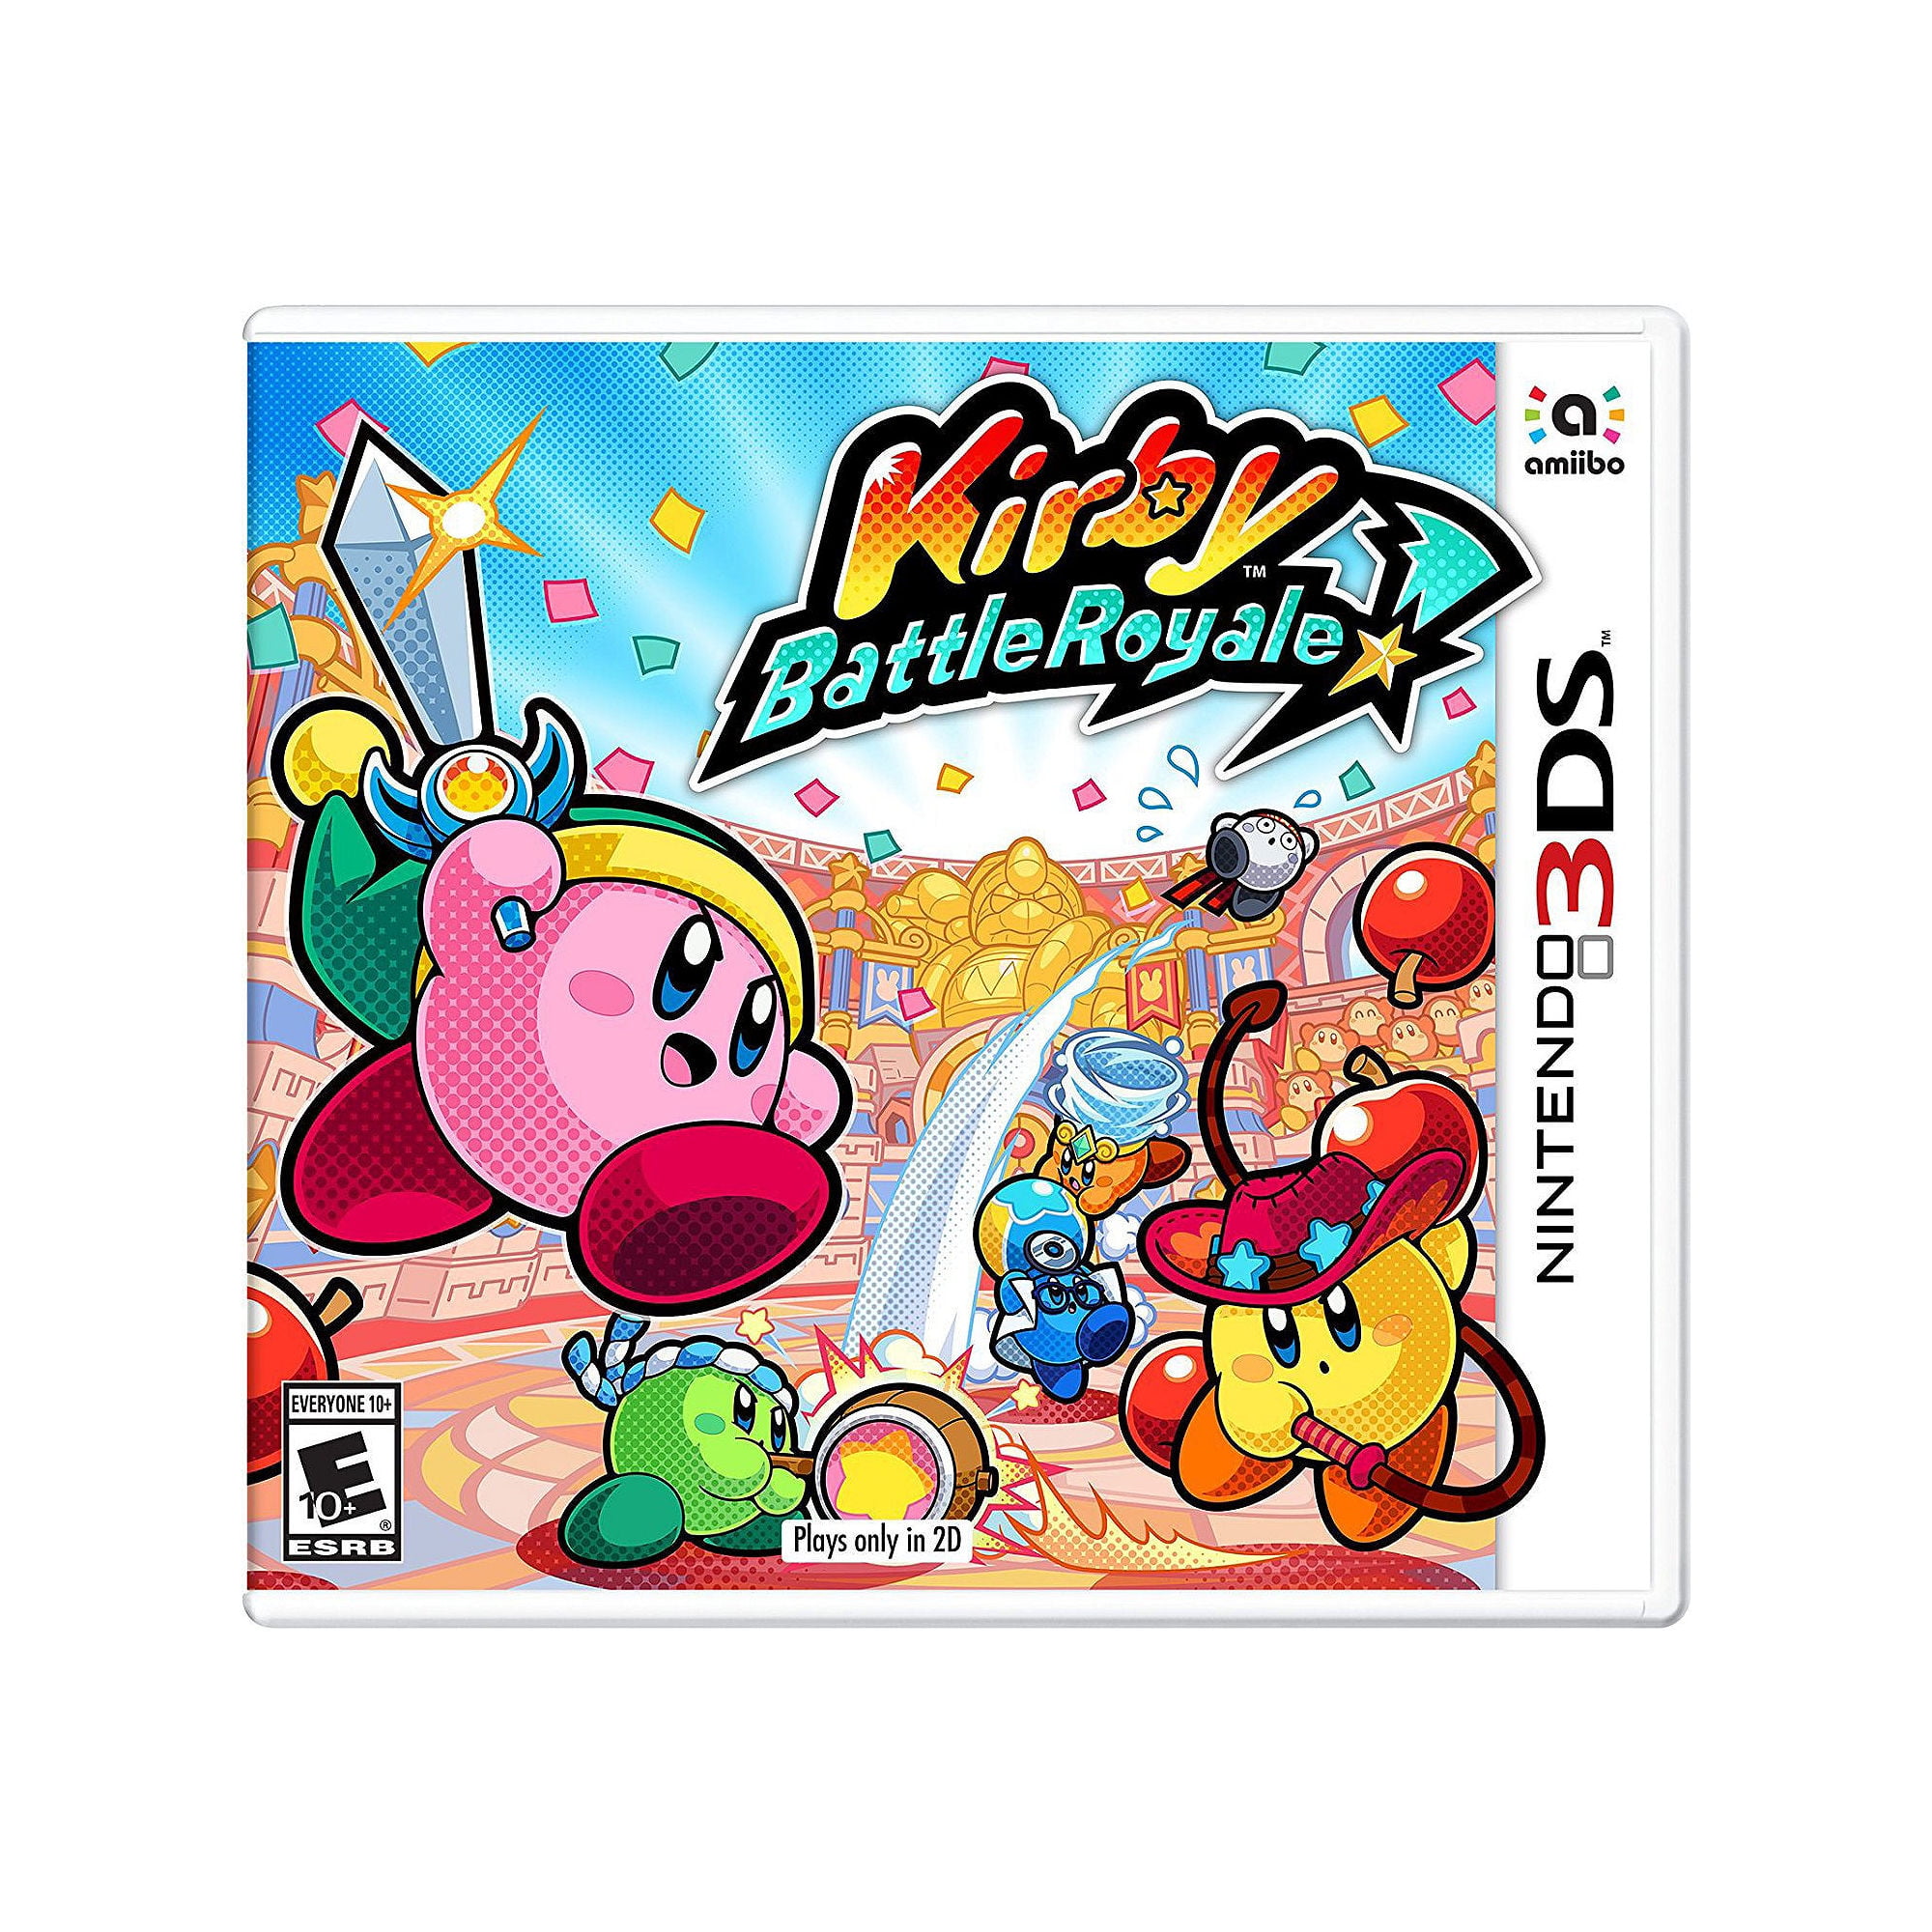 Nintendo GameBoy Games - Select Your Title - Game Boy Mario Pokemon Kirby  Zelda